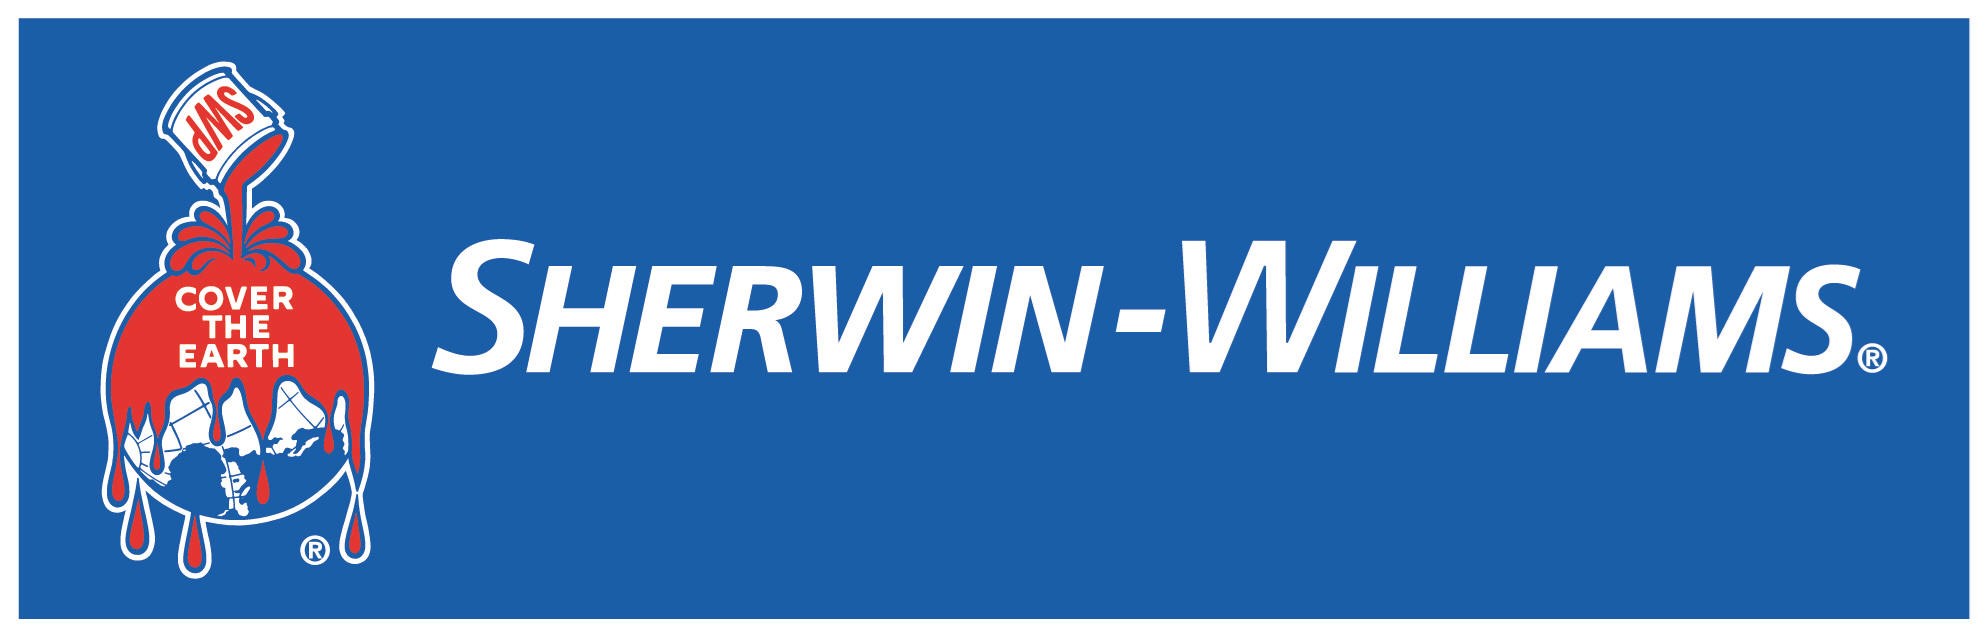 Sherwin-Williams-Logo-1.jpg